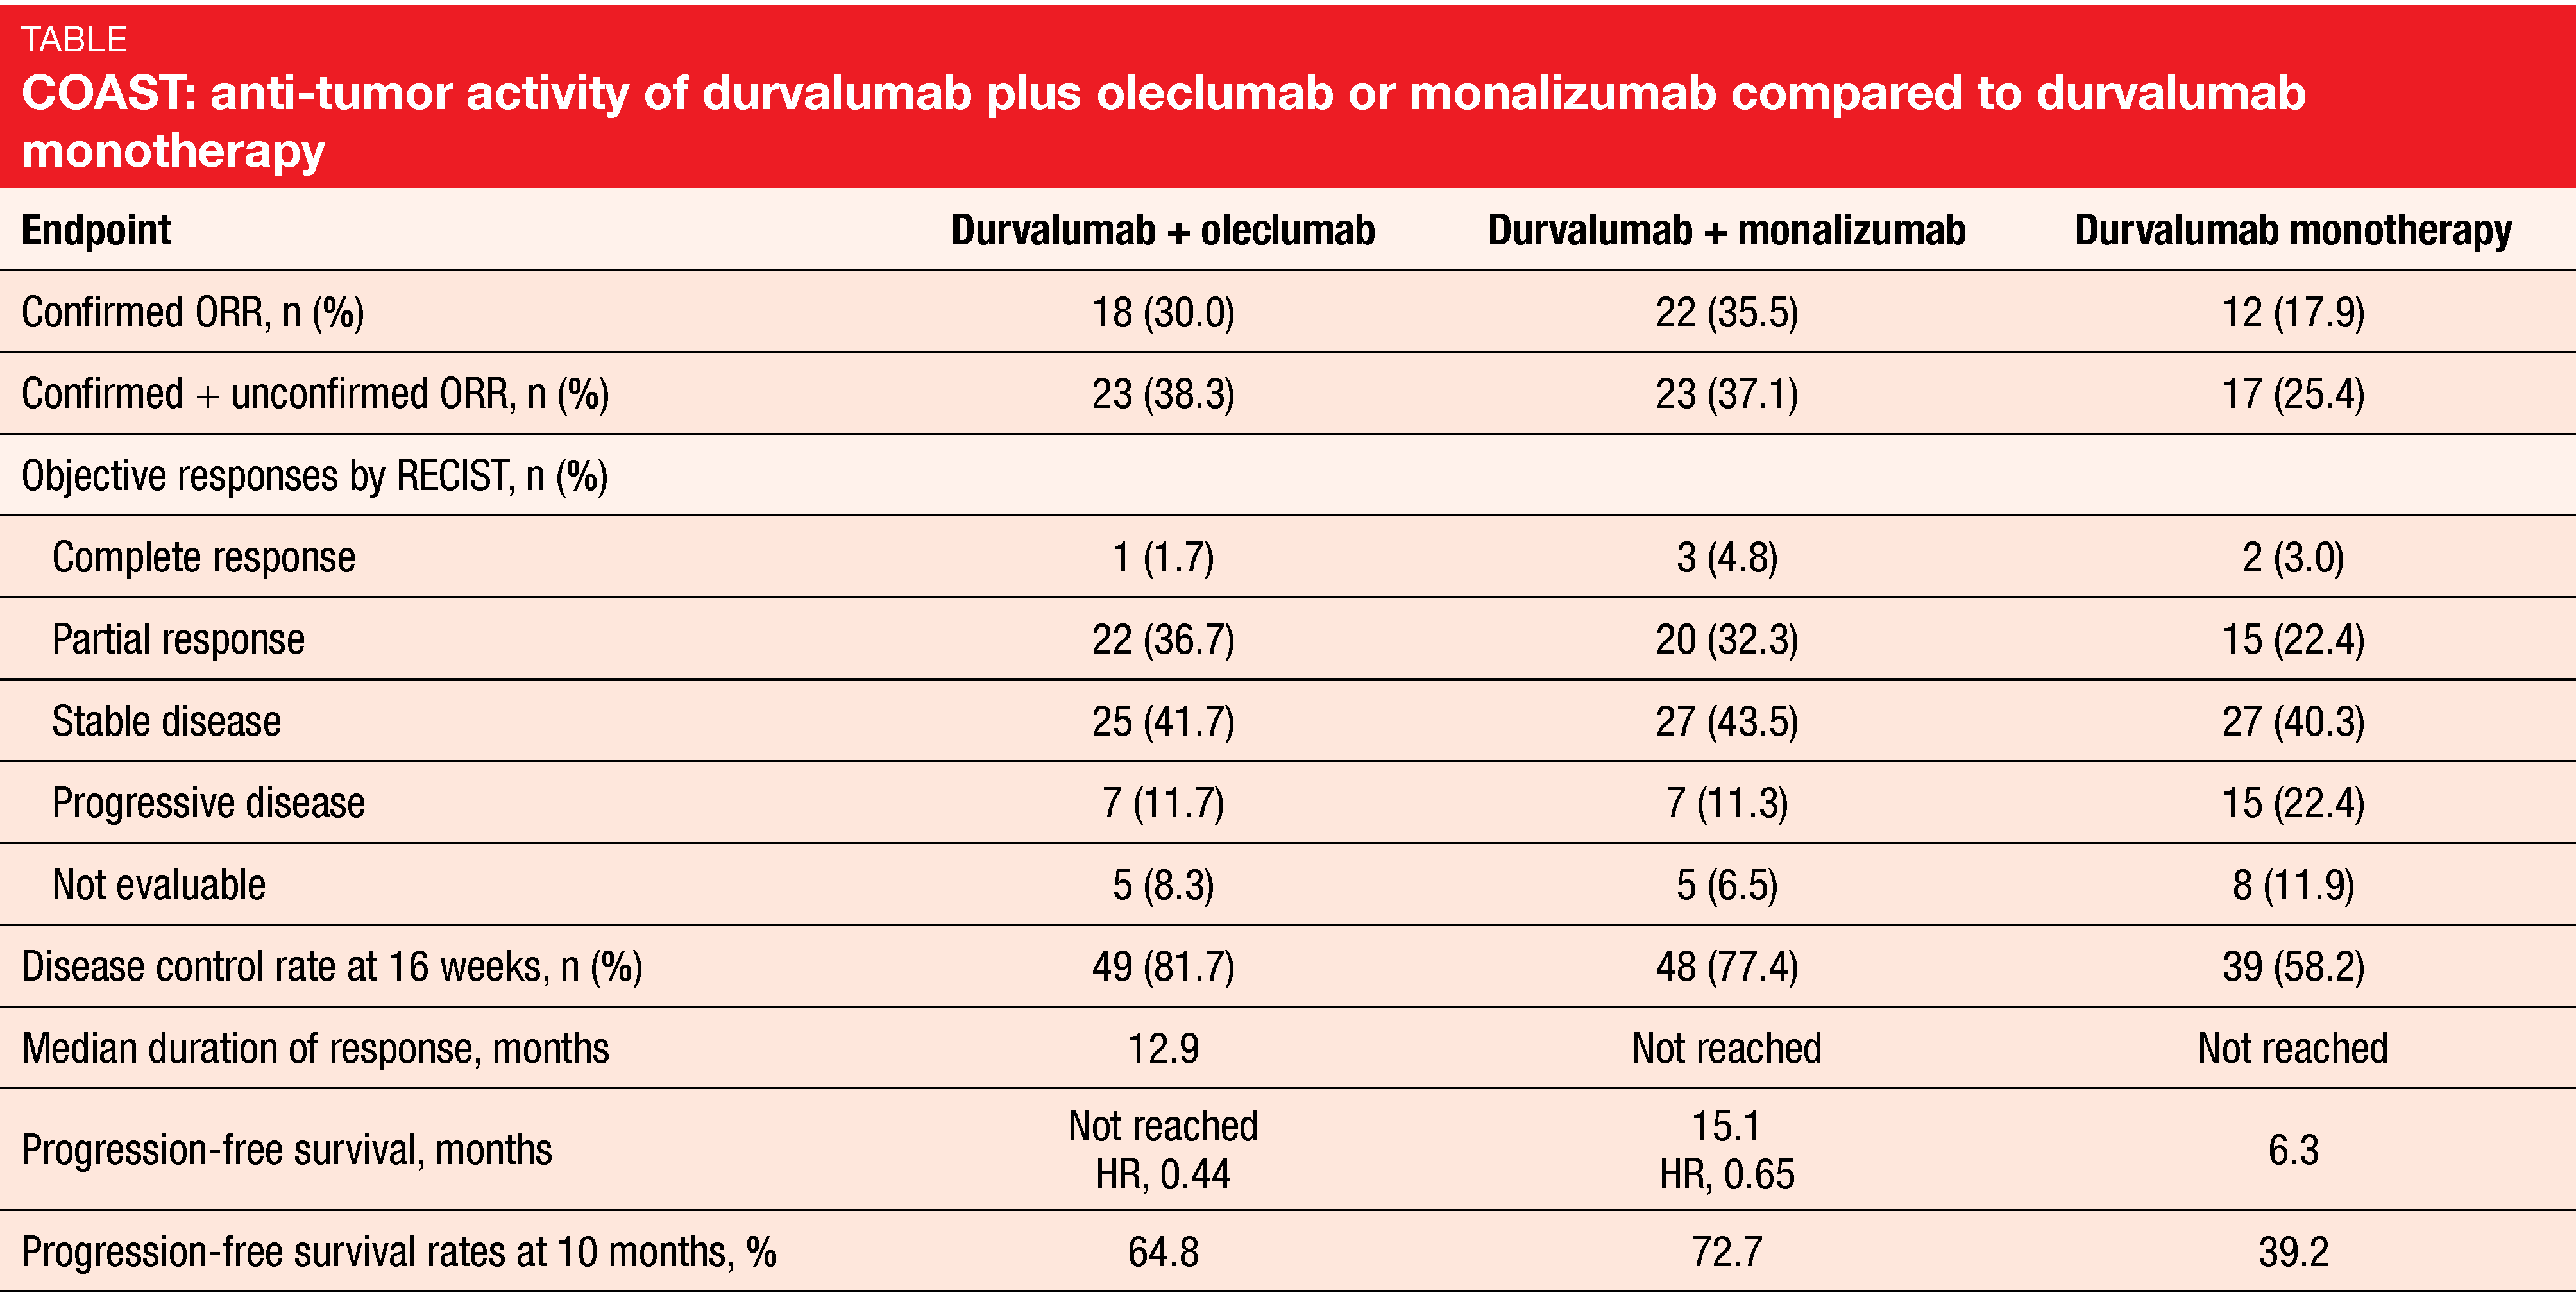 COAST: anti-tumor activity of durvalumab plus oleclumab or monalizumab compared to durvalumab monotherapy